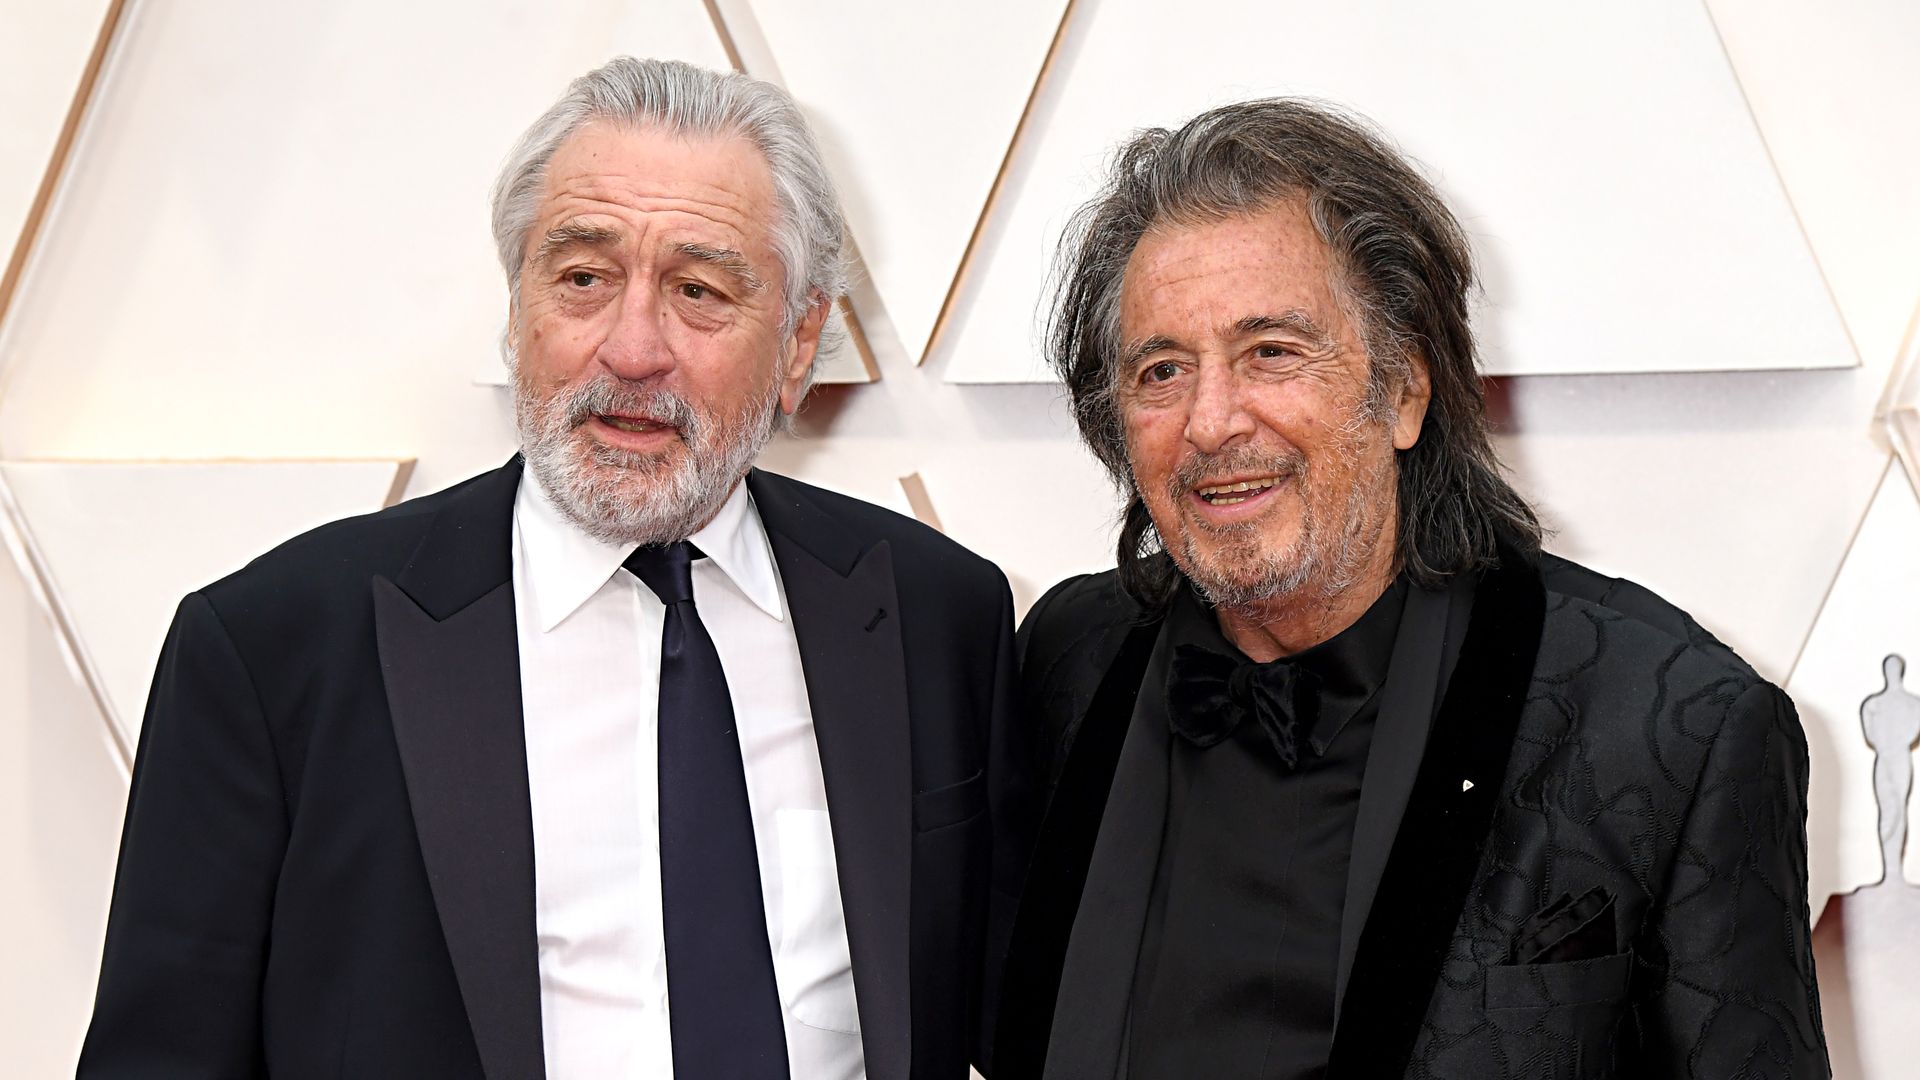 Meet the Celebrity OAPs (Old Age Papas): Al Pacino, Robert De Niro & more